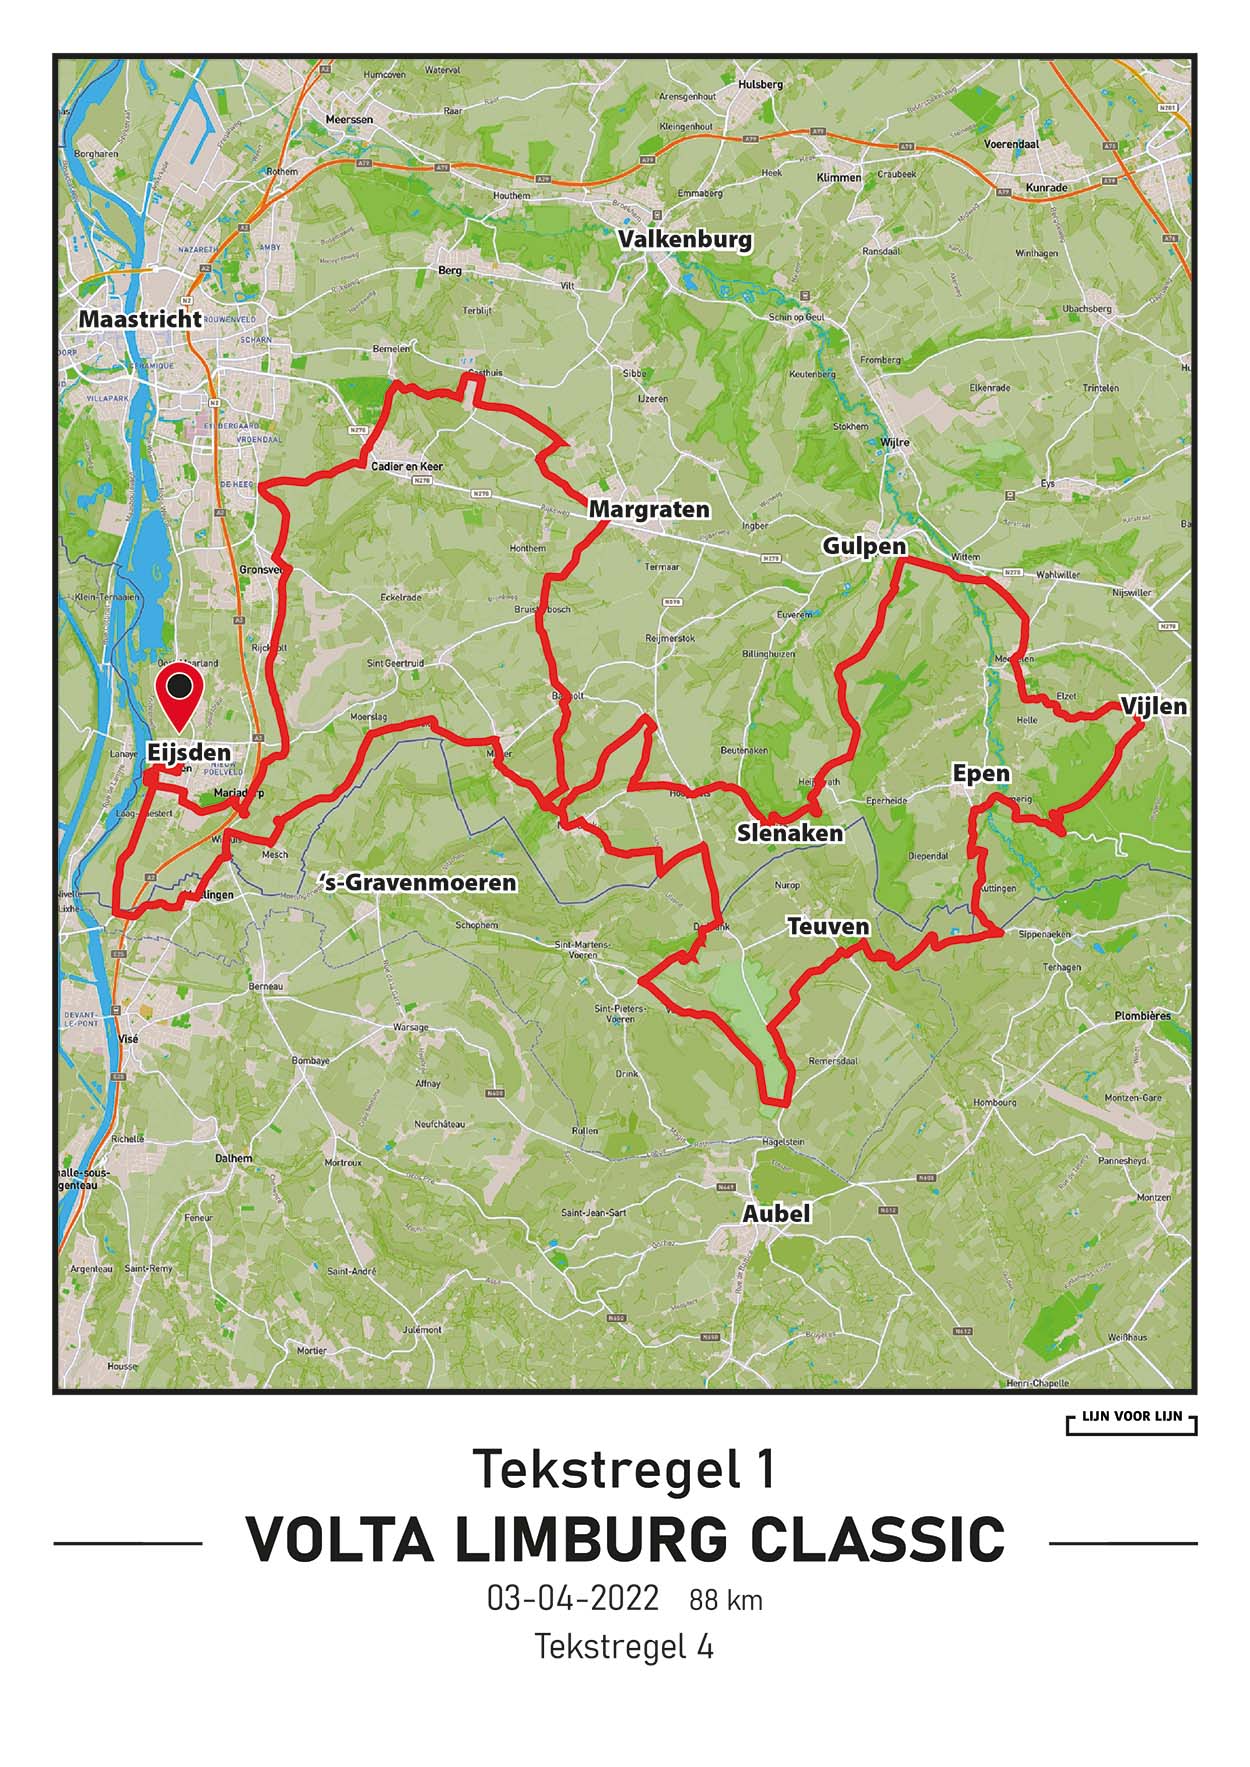 Volta Limburg Classic 88km, 2022